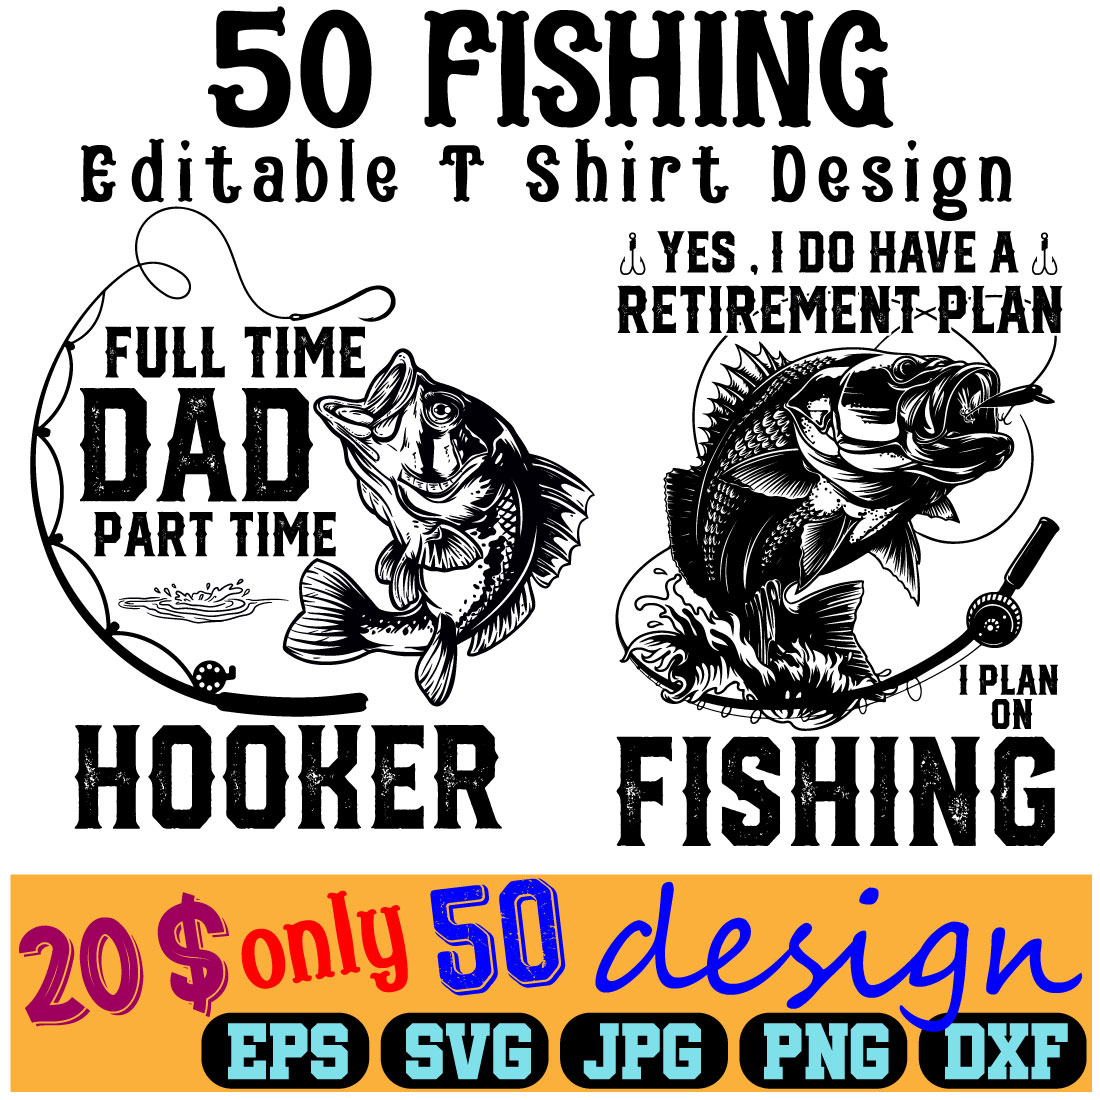 T-shirt Fishing Design Editable Bundle cover image.